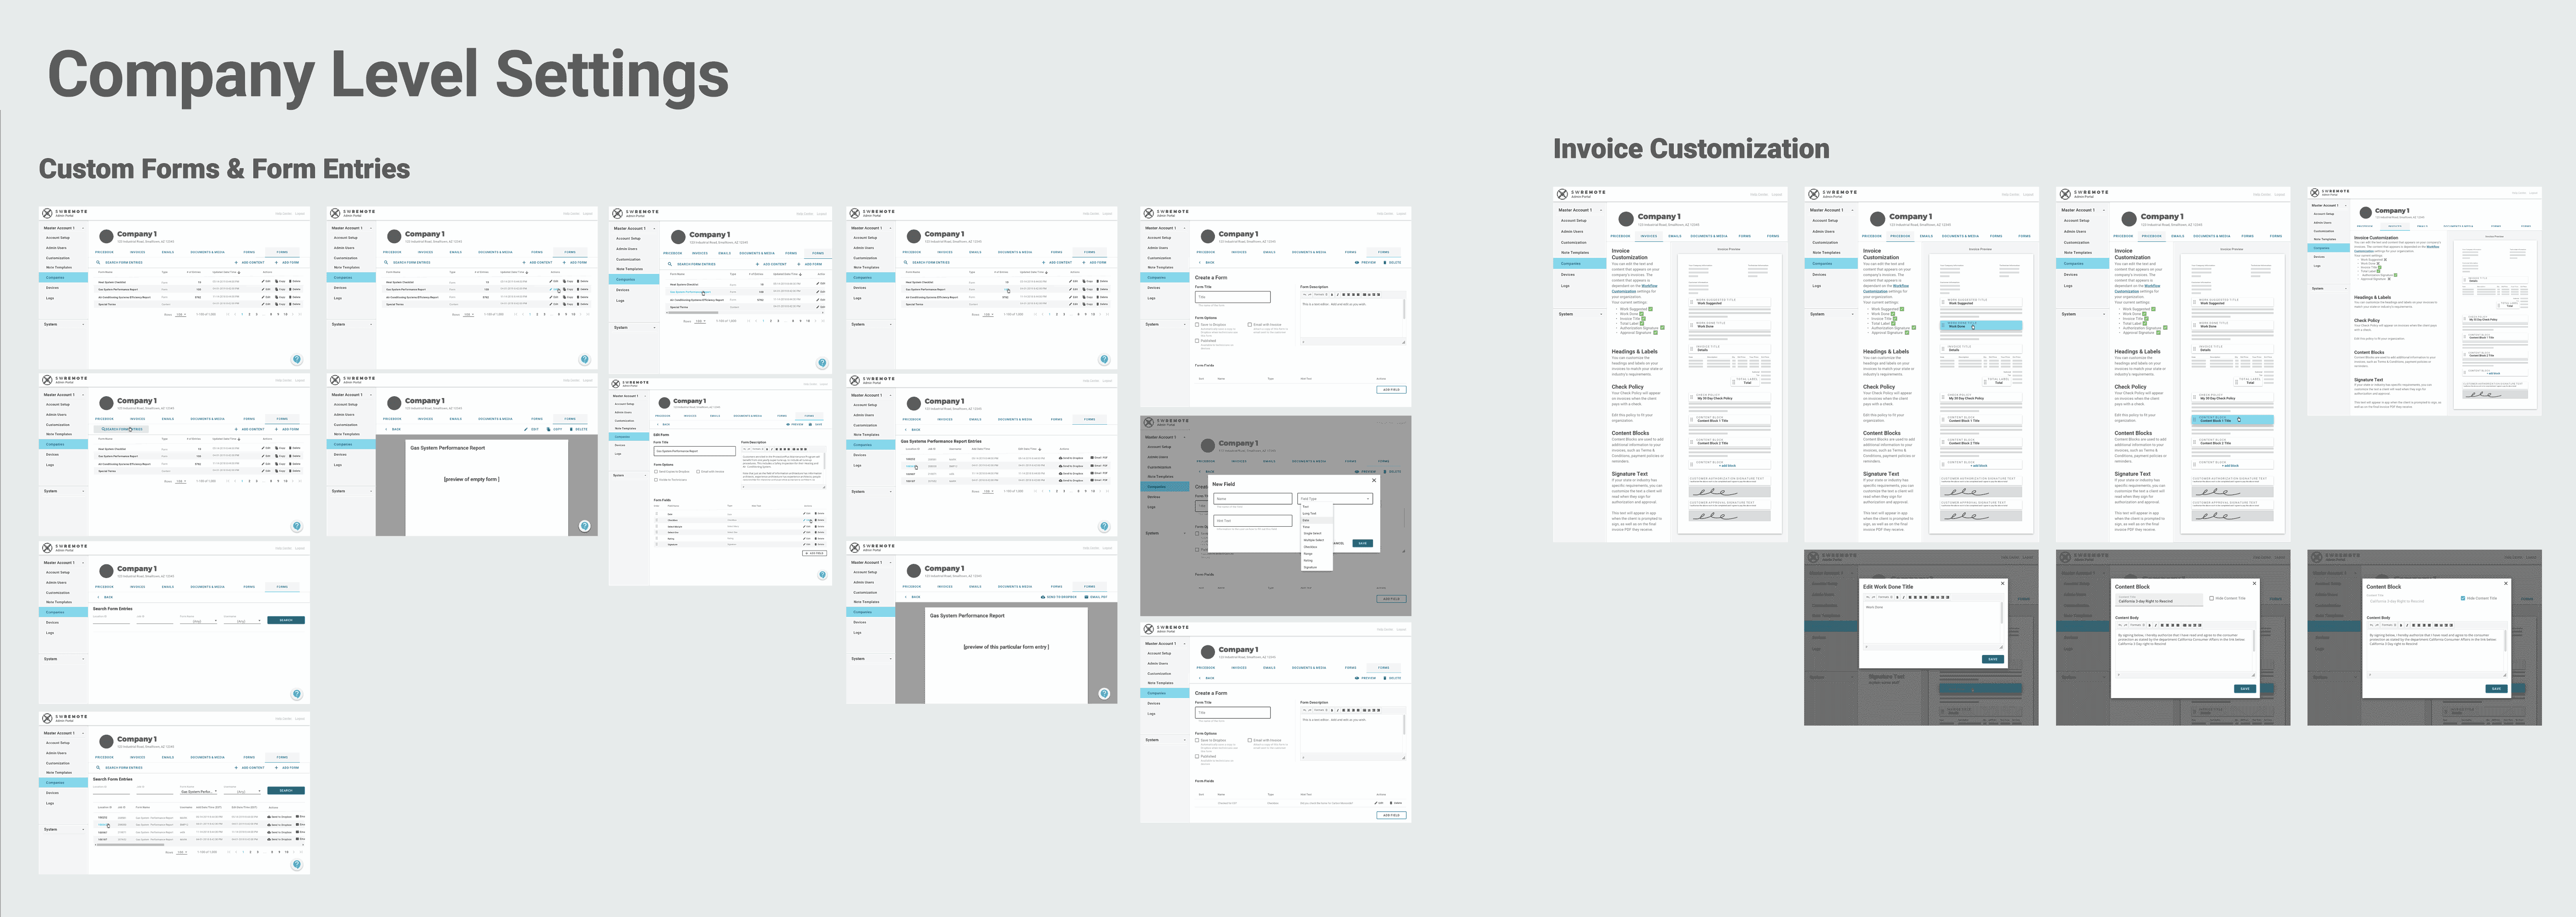 company level settings screens